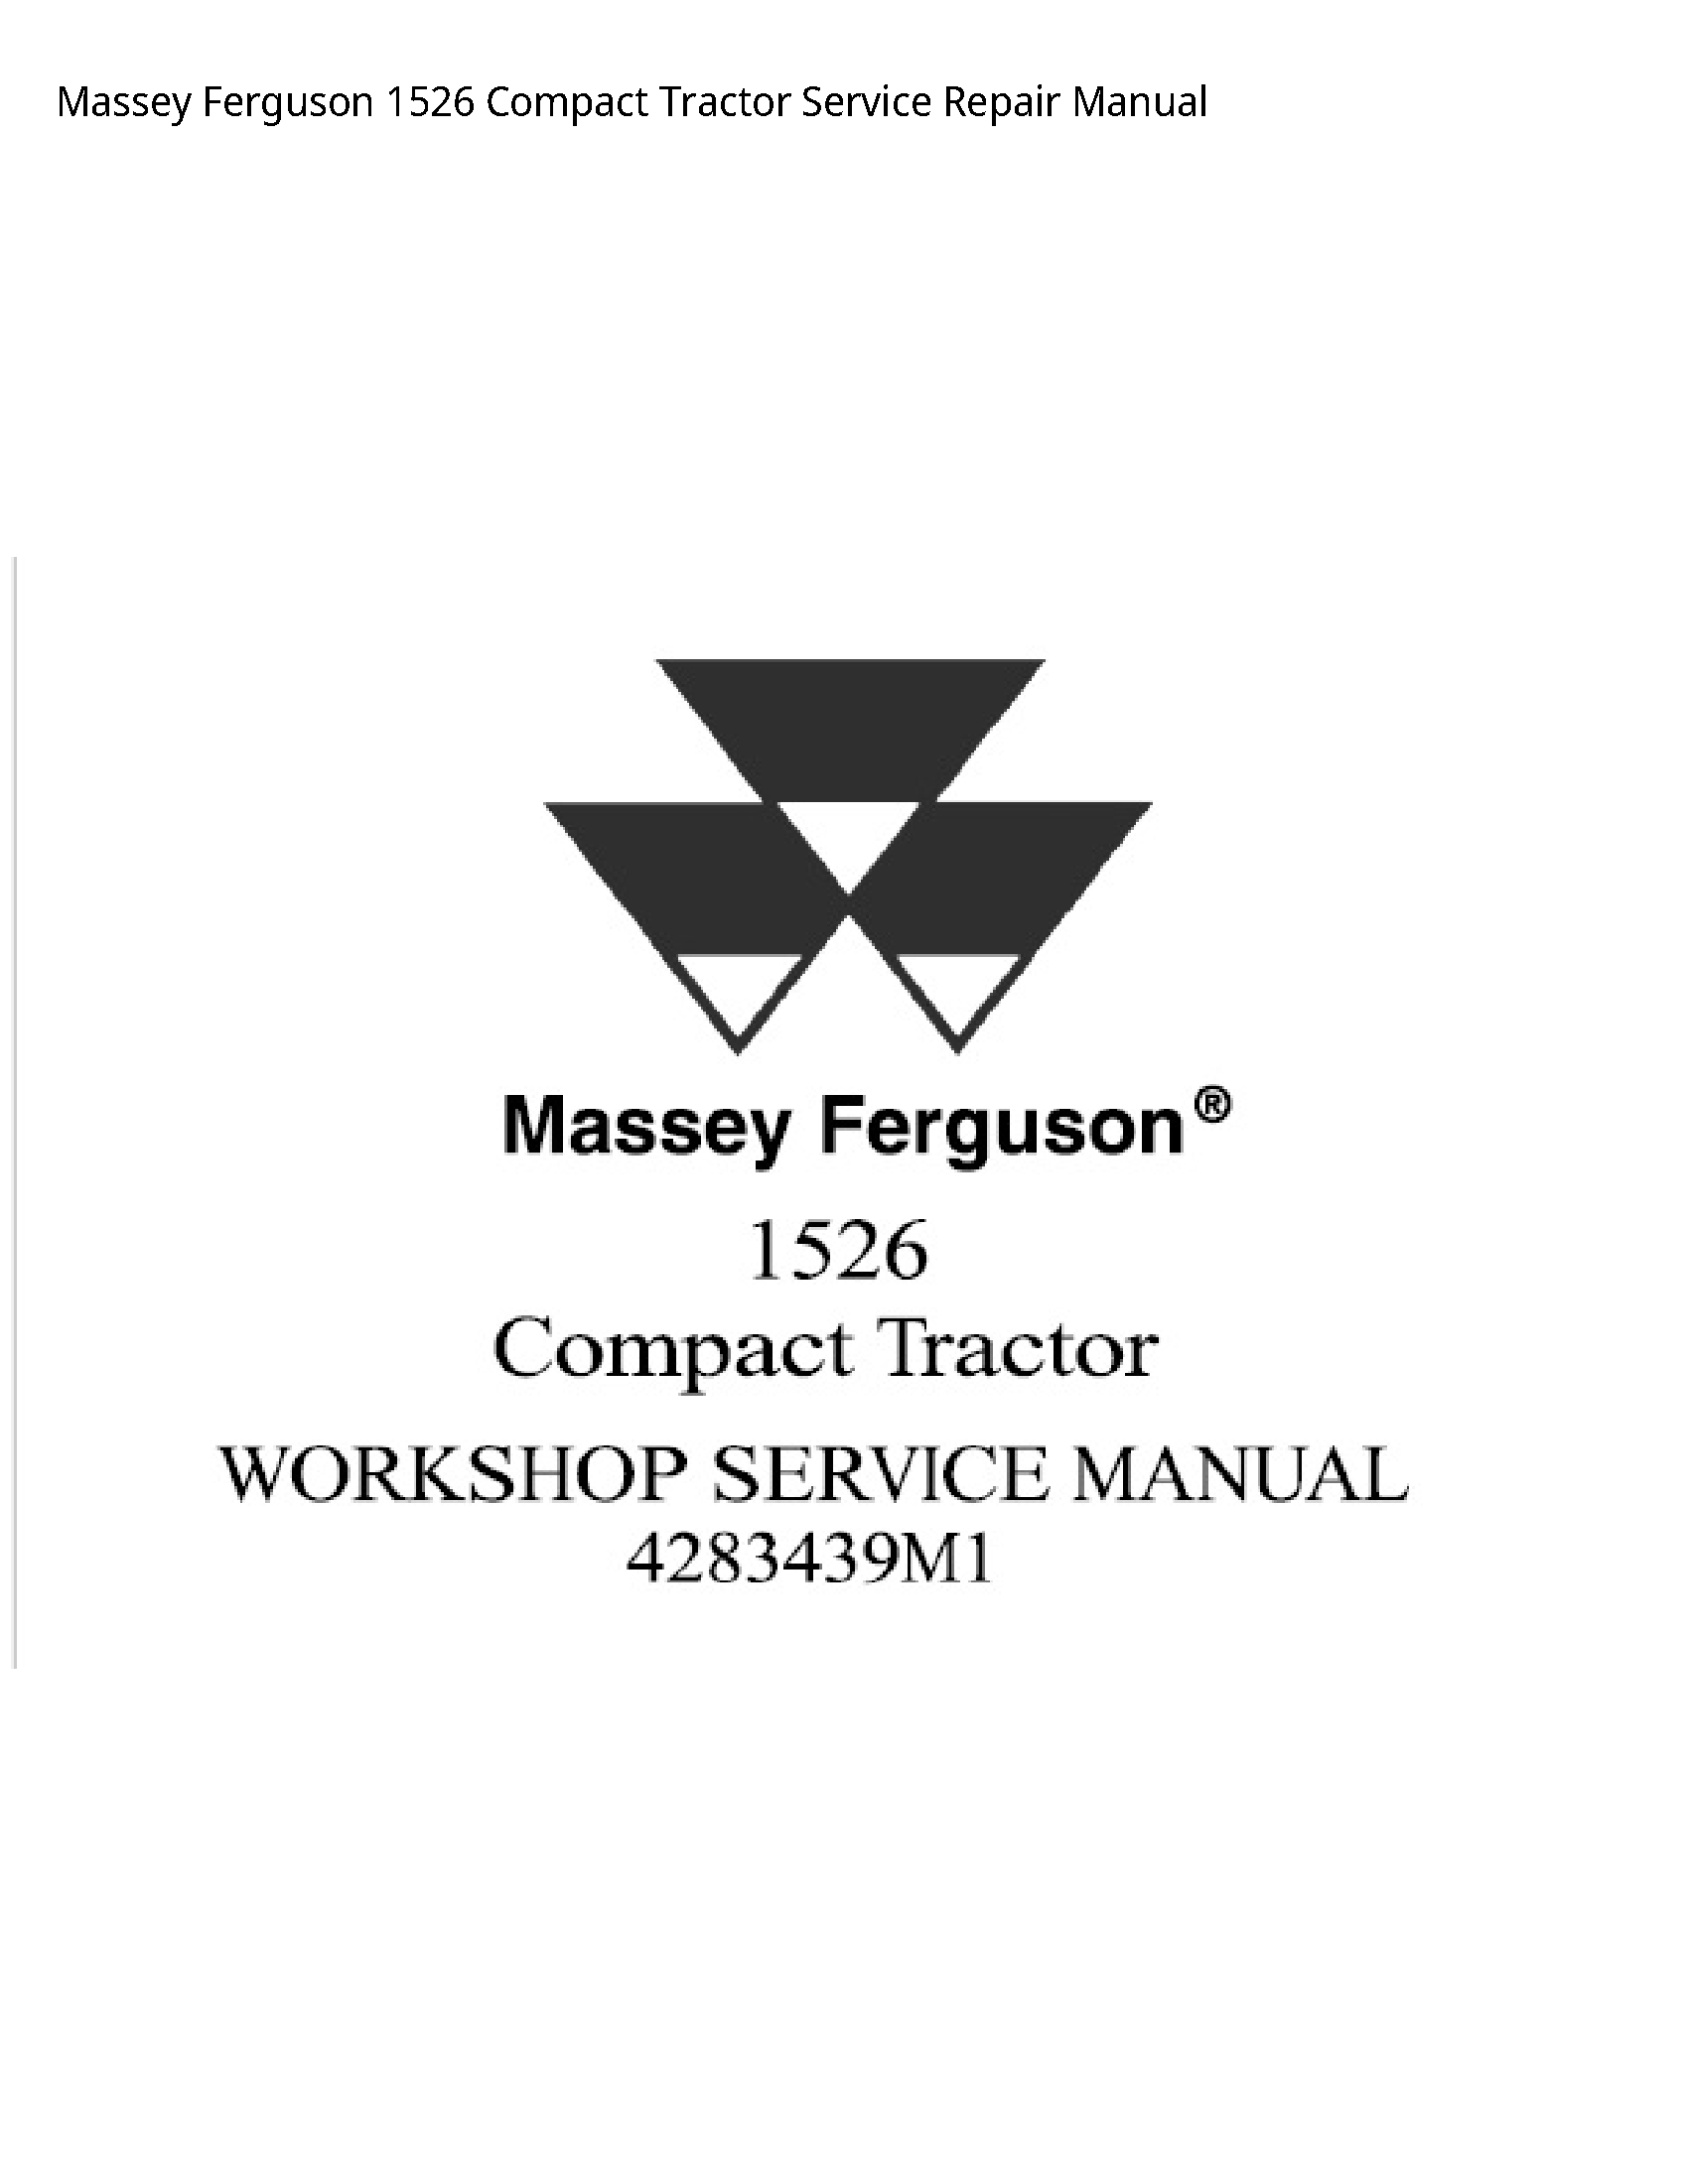 Massey Ferguson 1526 Compact Tractor manual